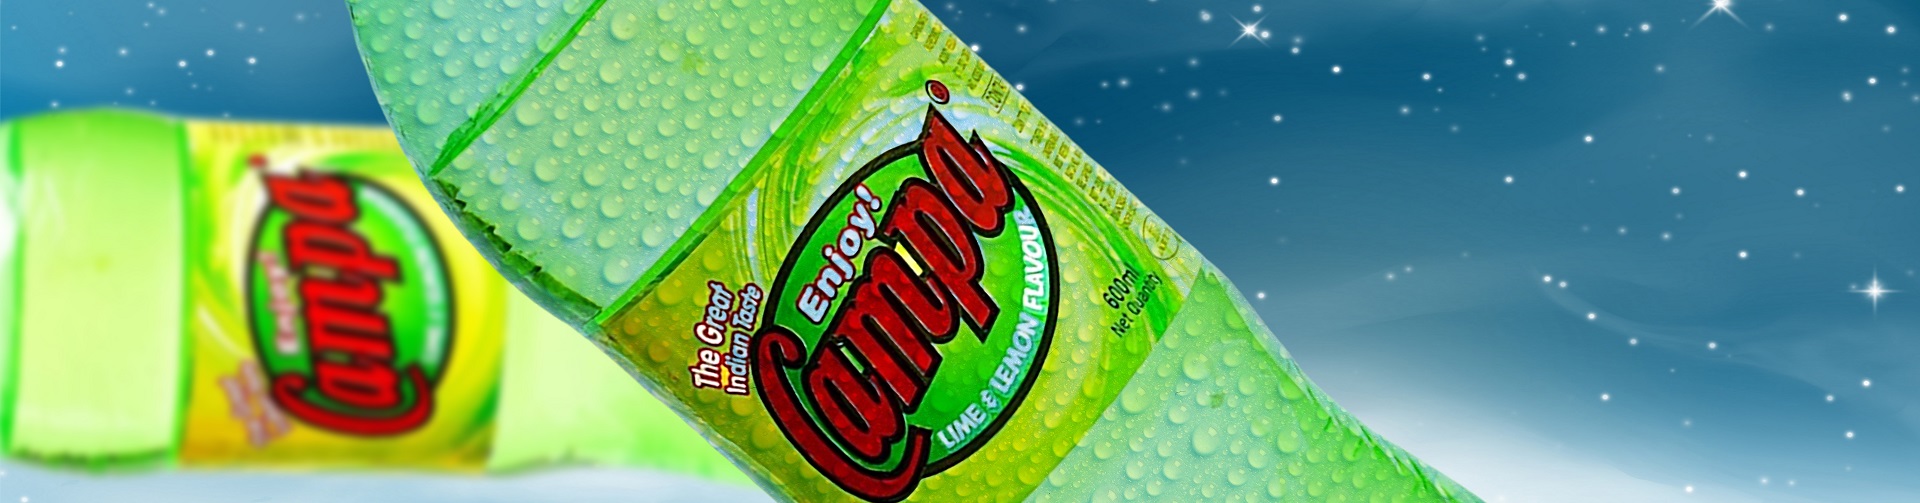 Image promoting Campa lime and lemon banner beverage